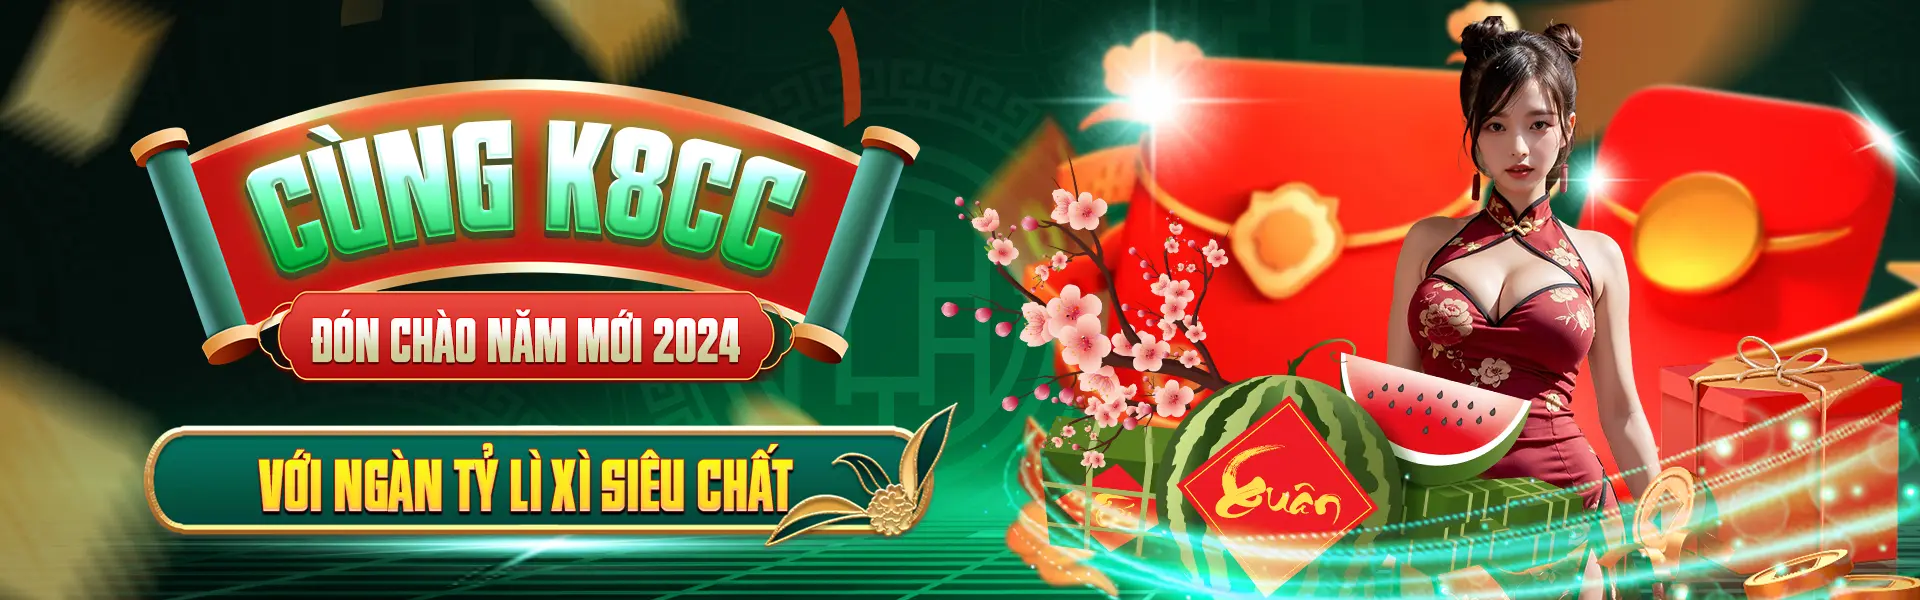 cung-k8cc-don-chao-nam-moi-2024-voi-ngan-ty-li-xi-sieu-chat